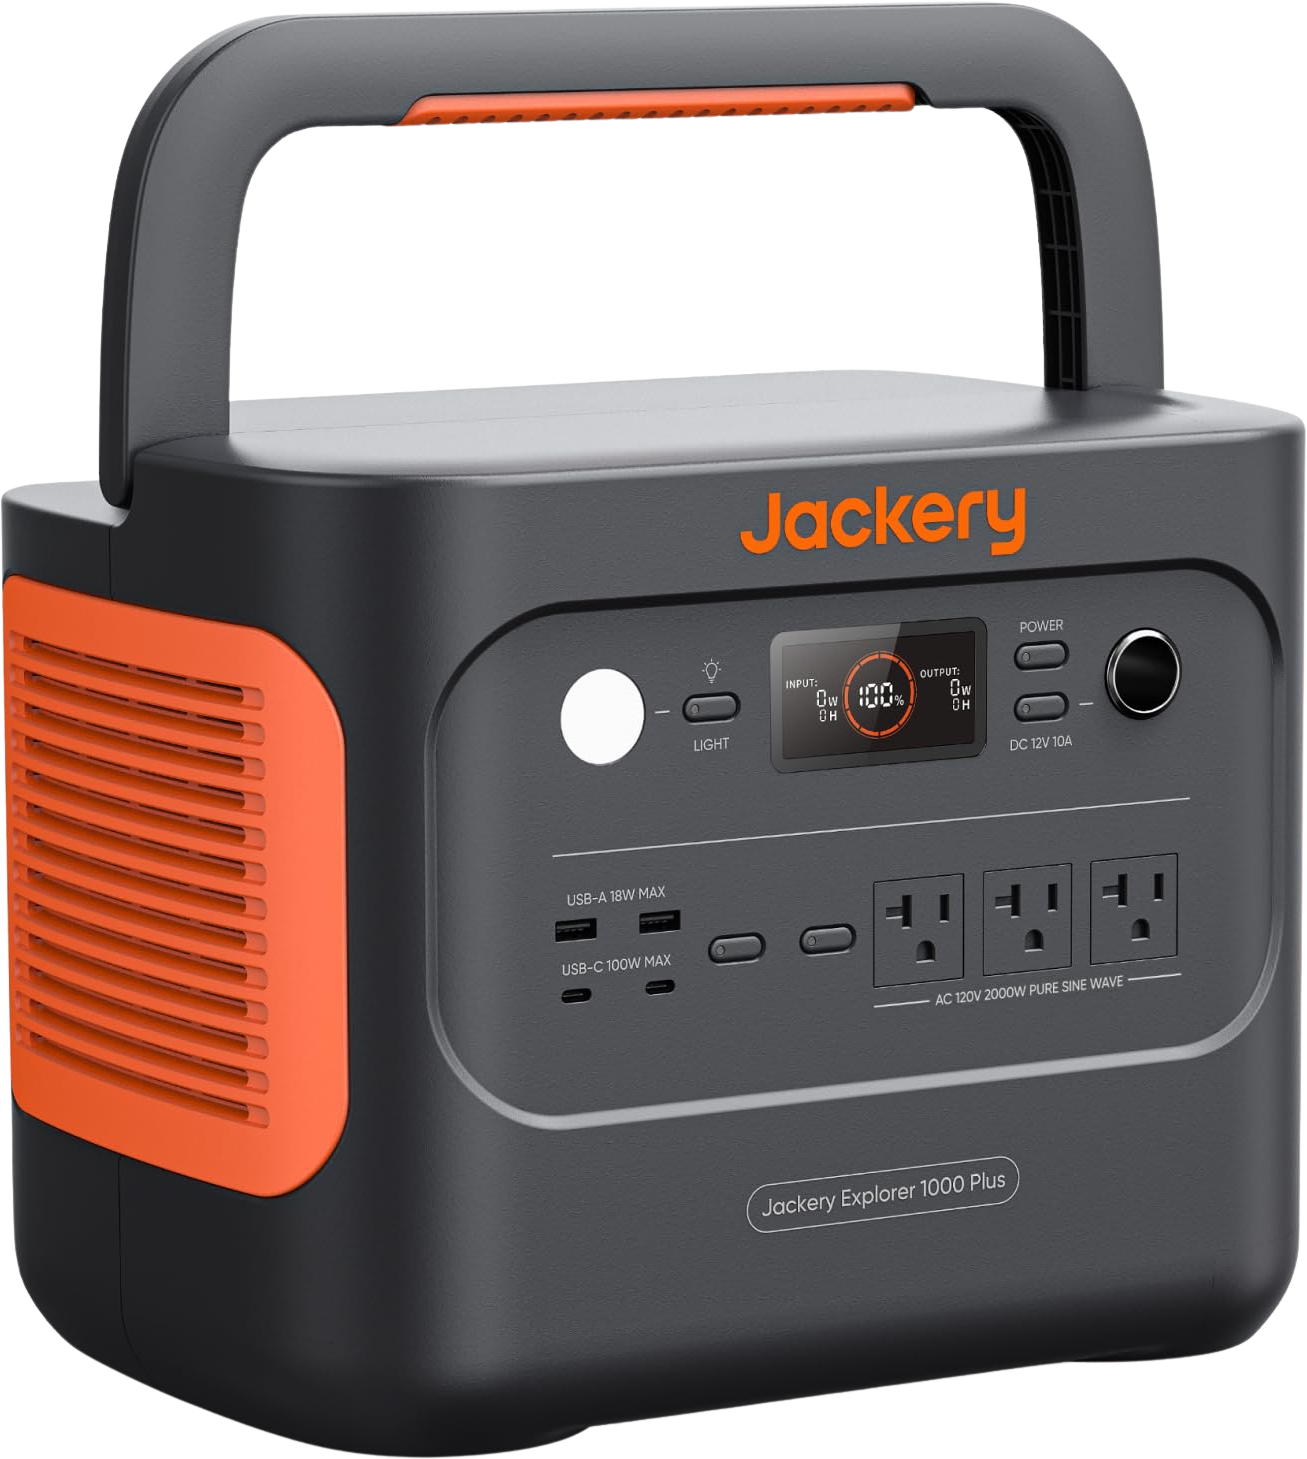 Jackery Explorer 1000 Plus Portable Power Station 1264Wh 2000W New